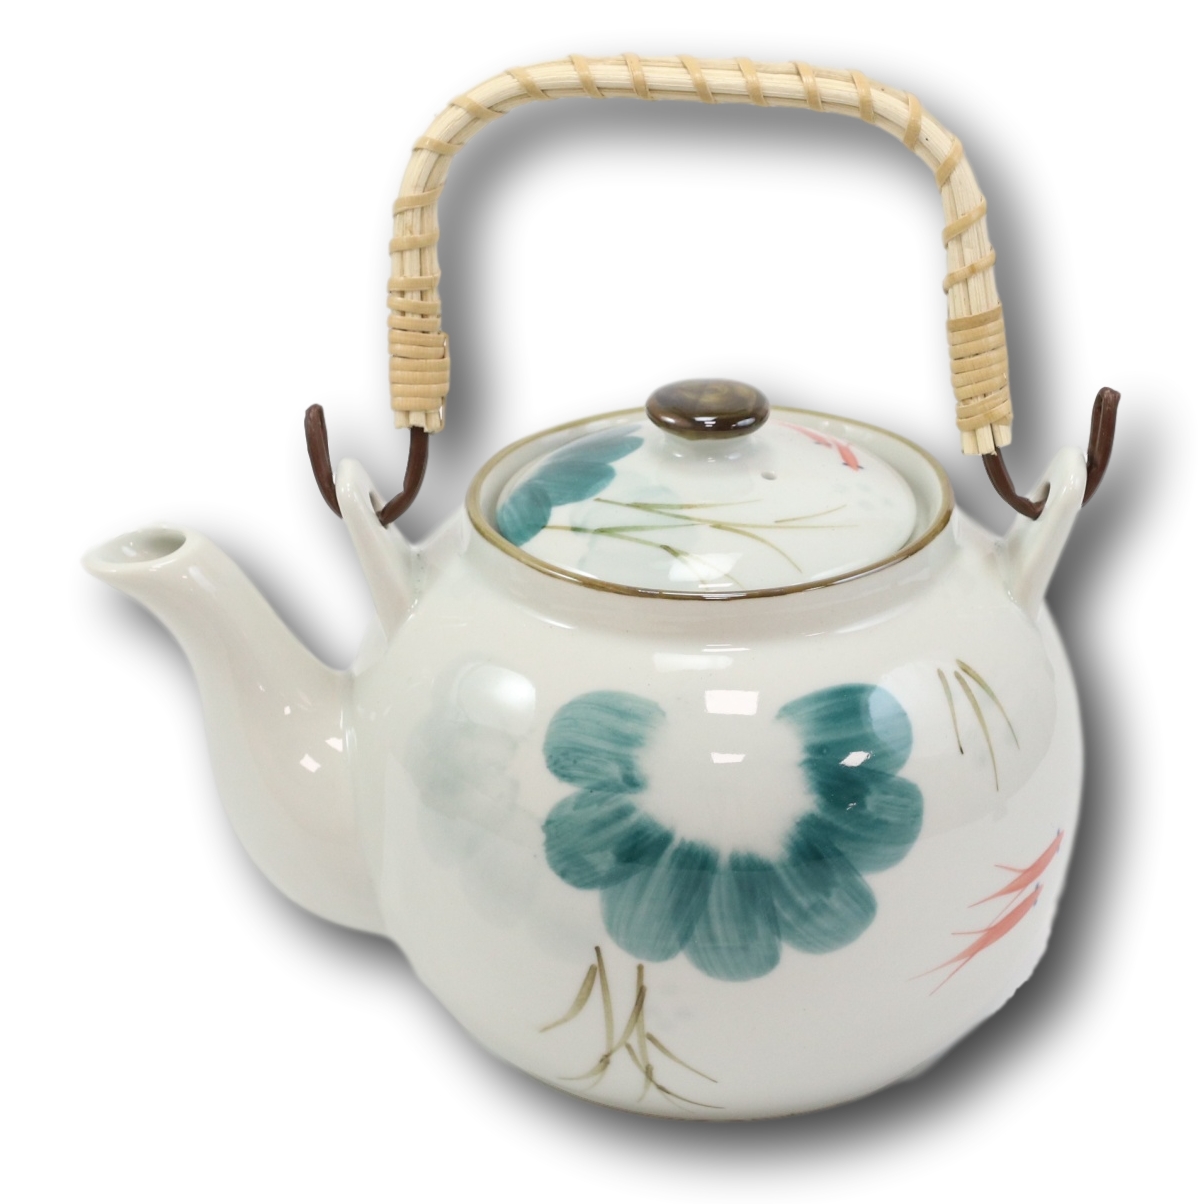 Feng Shui Yin Yang Koi Fish Pair In Lily Pond Ceramic Tea Pot 38oz Teapot Decor - image 3 of 4